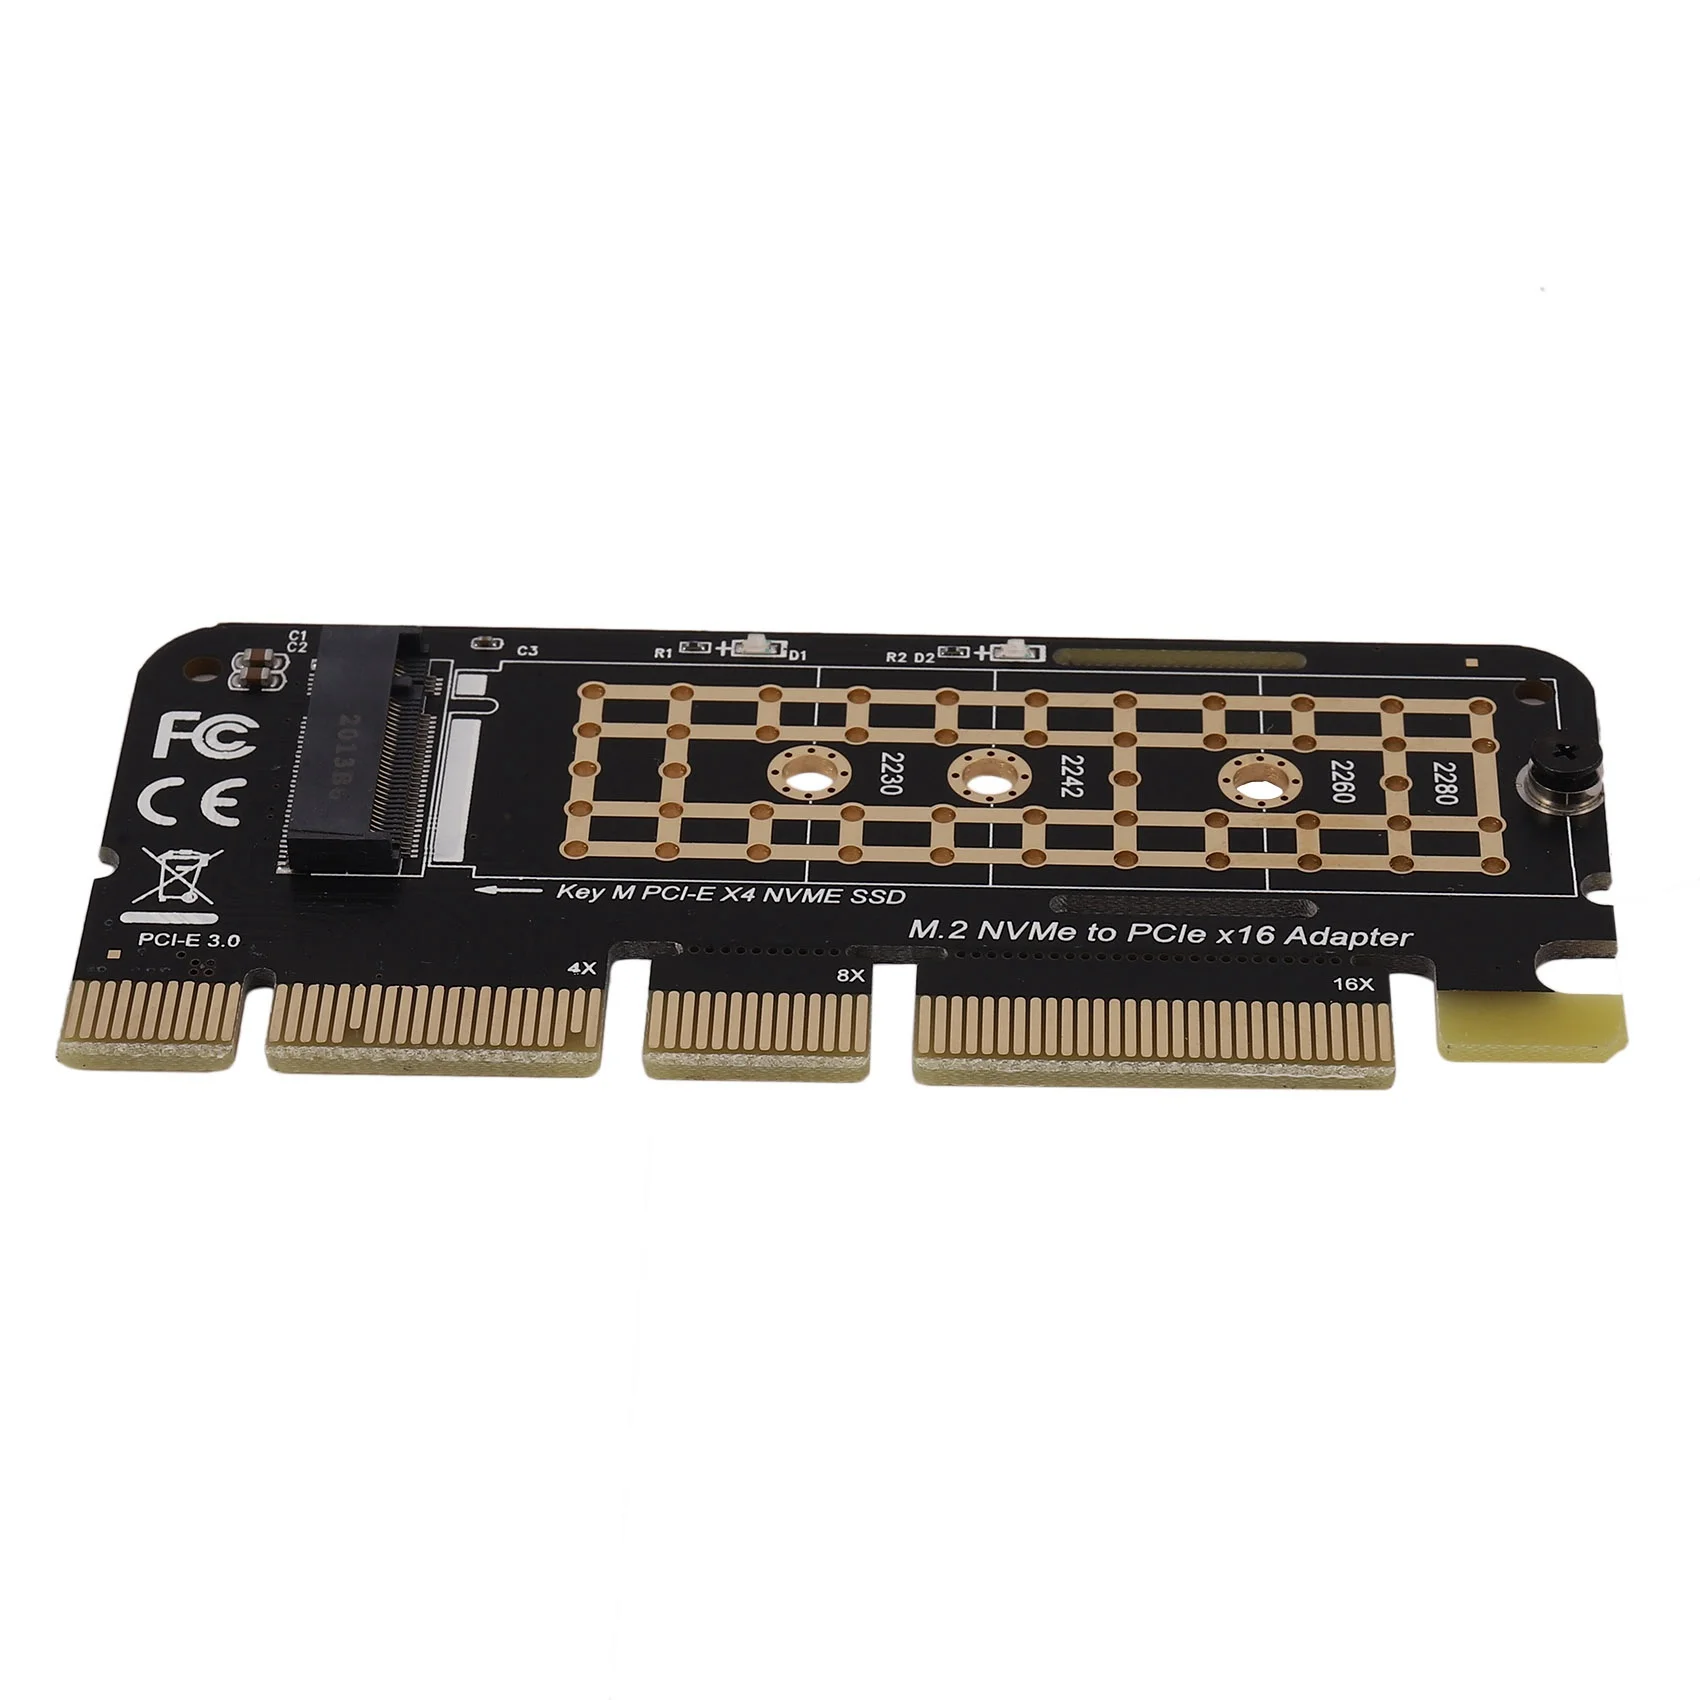 

Конвертер M.2 NVMe SSD/PCI-E x16, NGFF M-Key M.2, PCI-Express, x4, x8, x16, адаптер жесткого диска